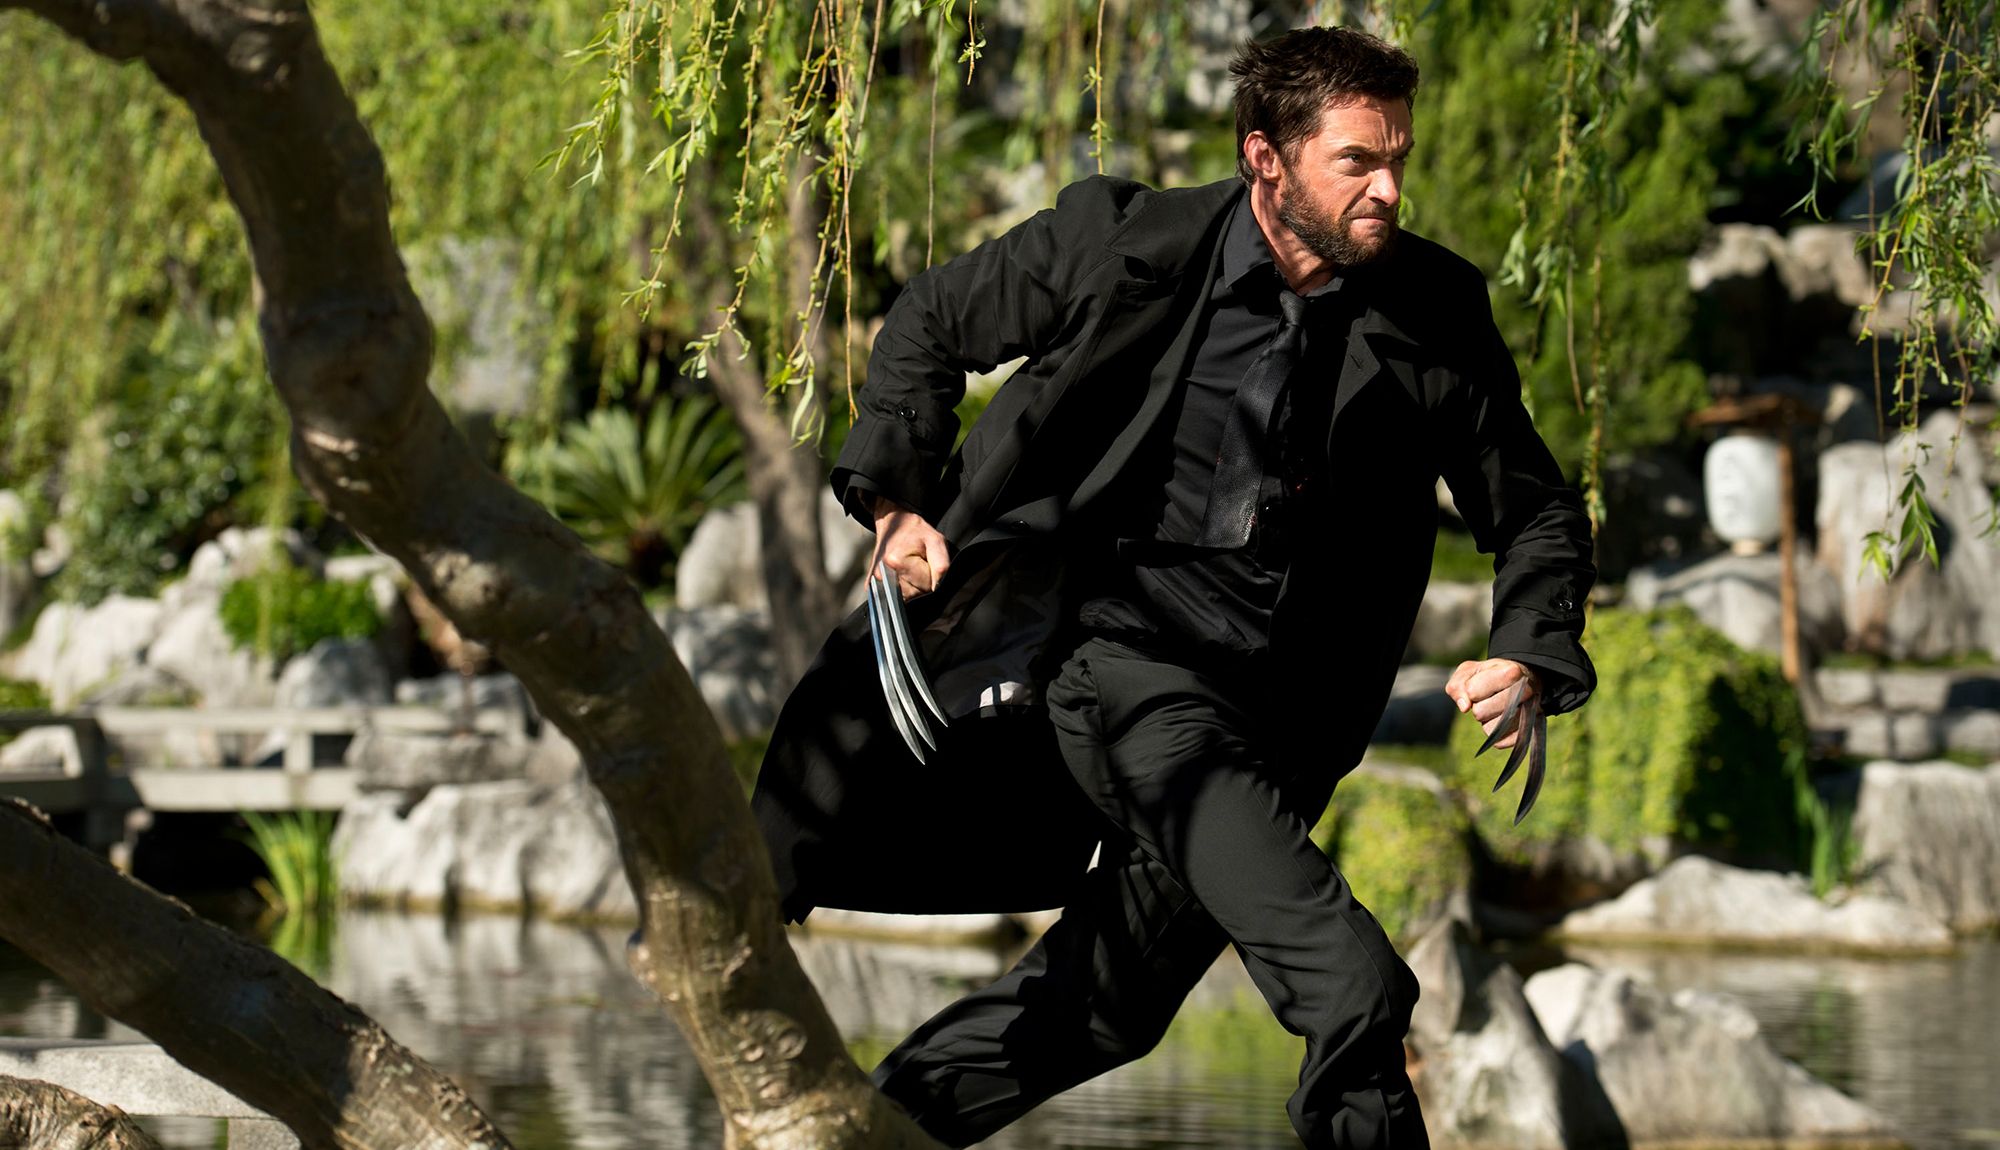 Black Suit Logan In The Wolverine